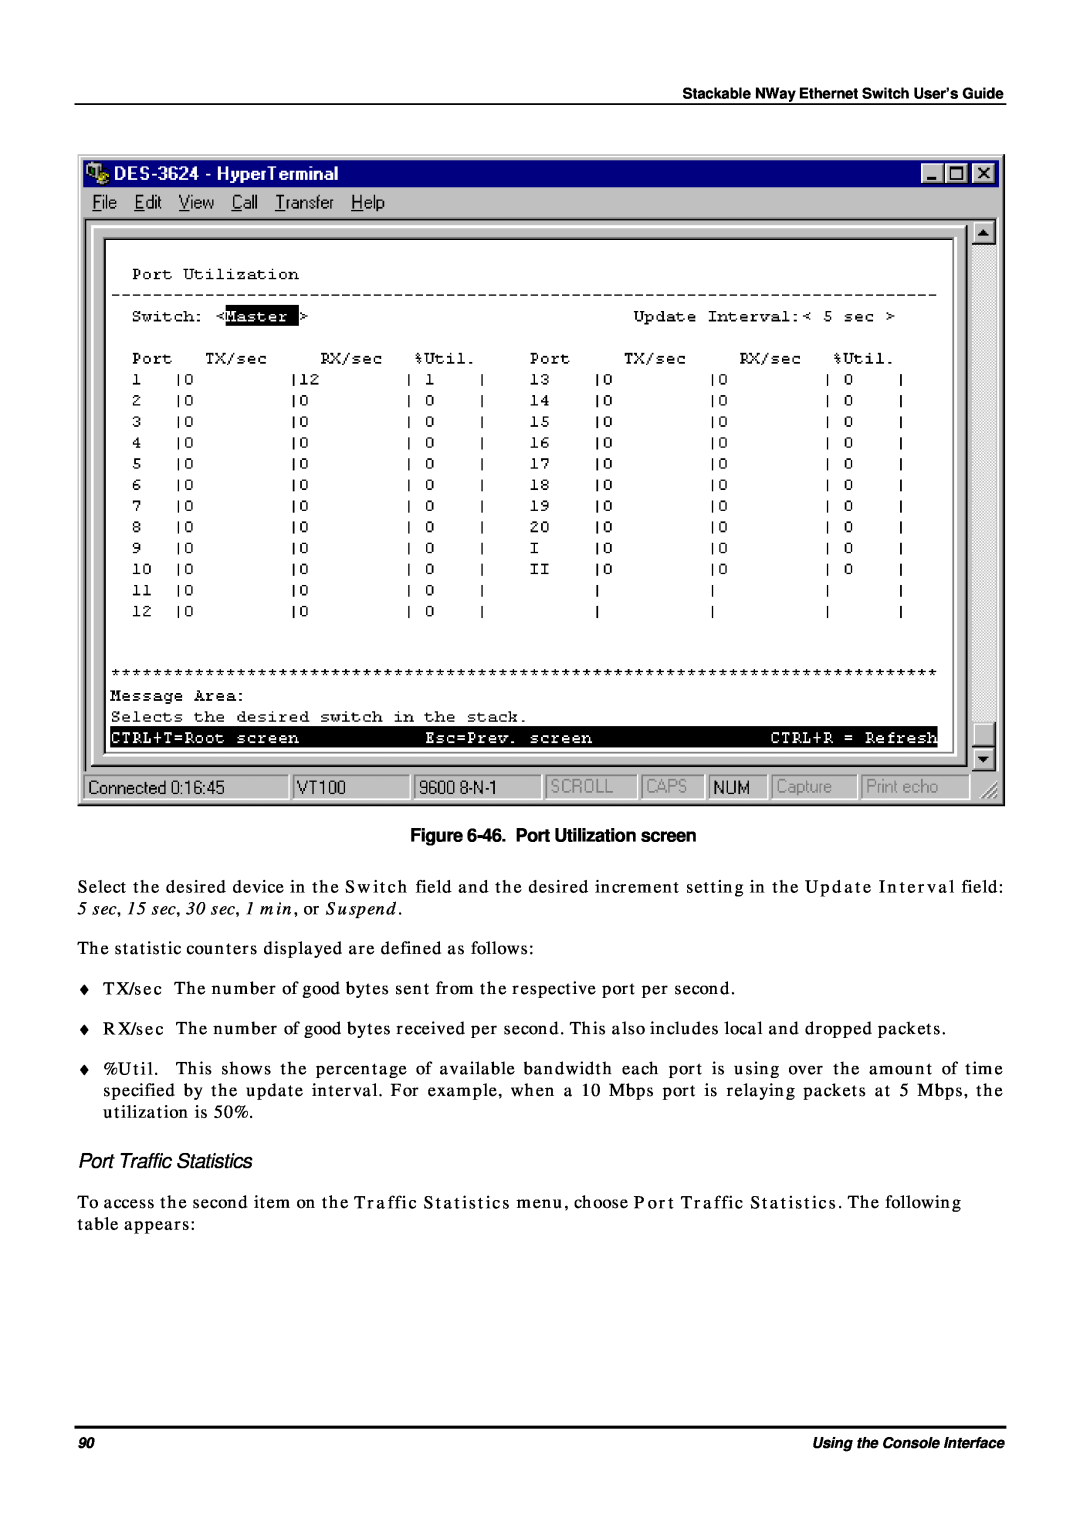 D-Link DES-3624 manual Port Traffic Statistics, 46. Port Utilization screen 